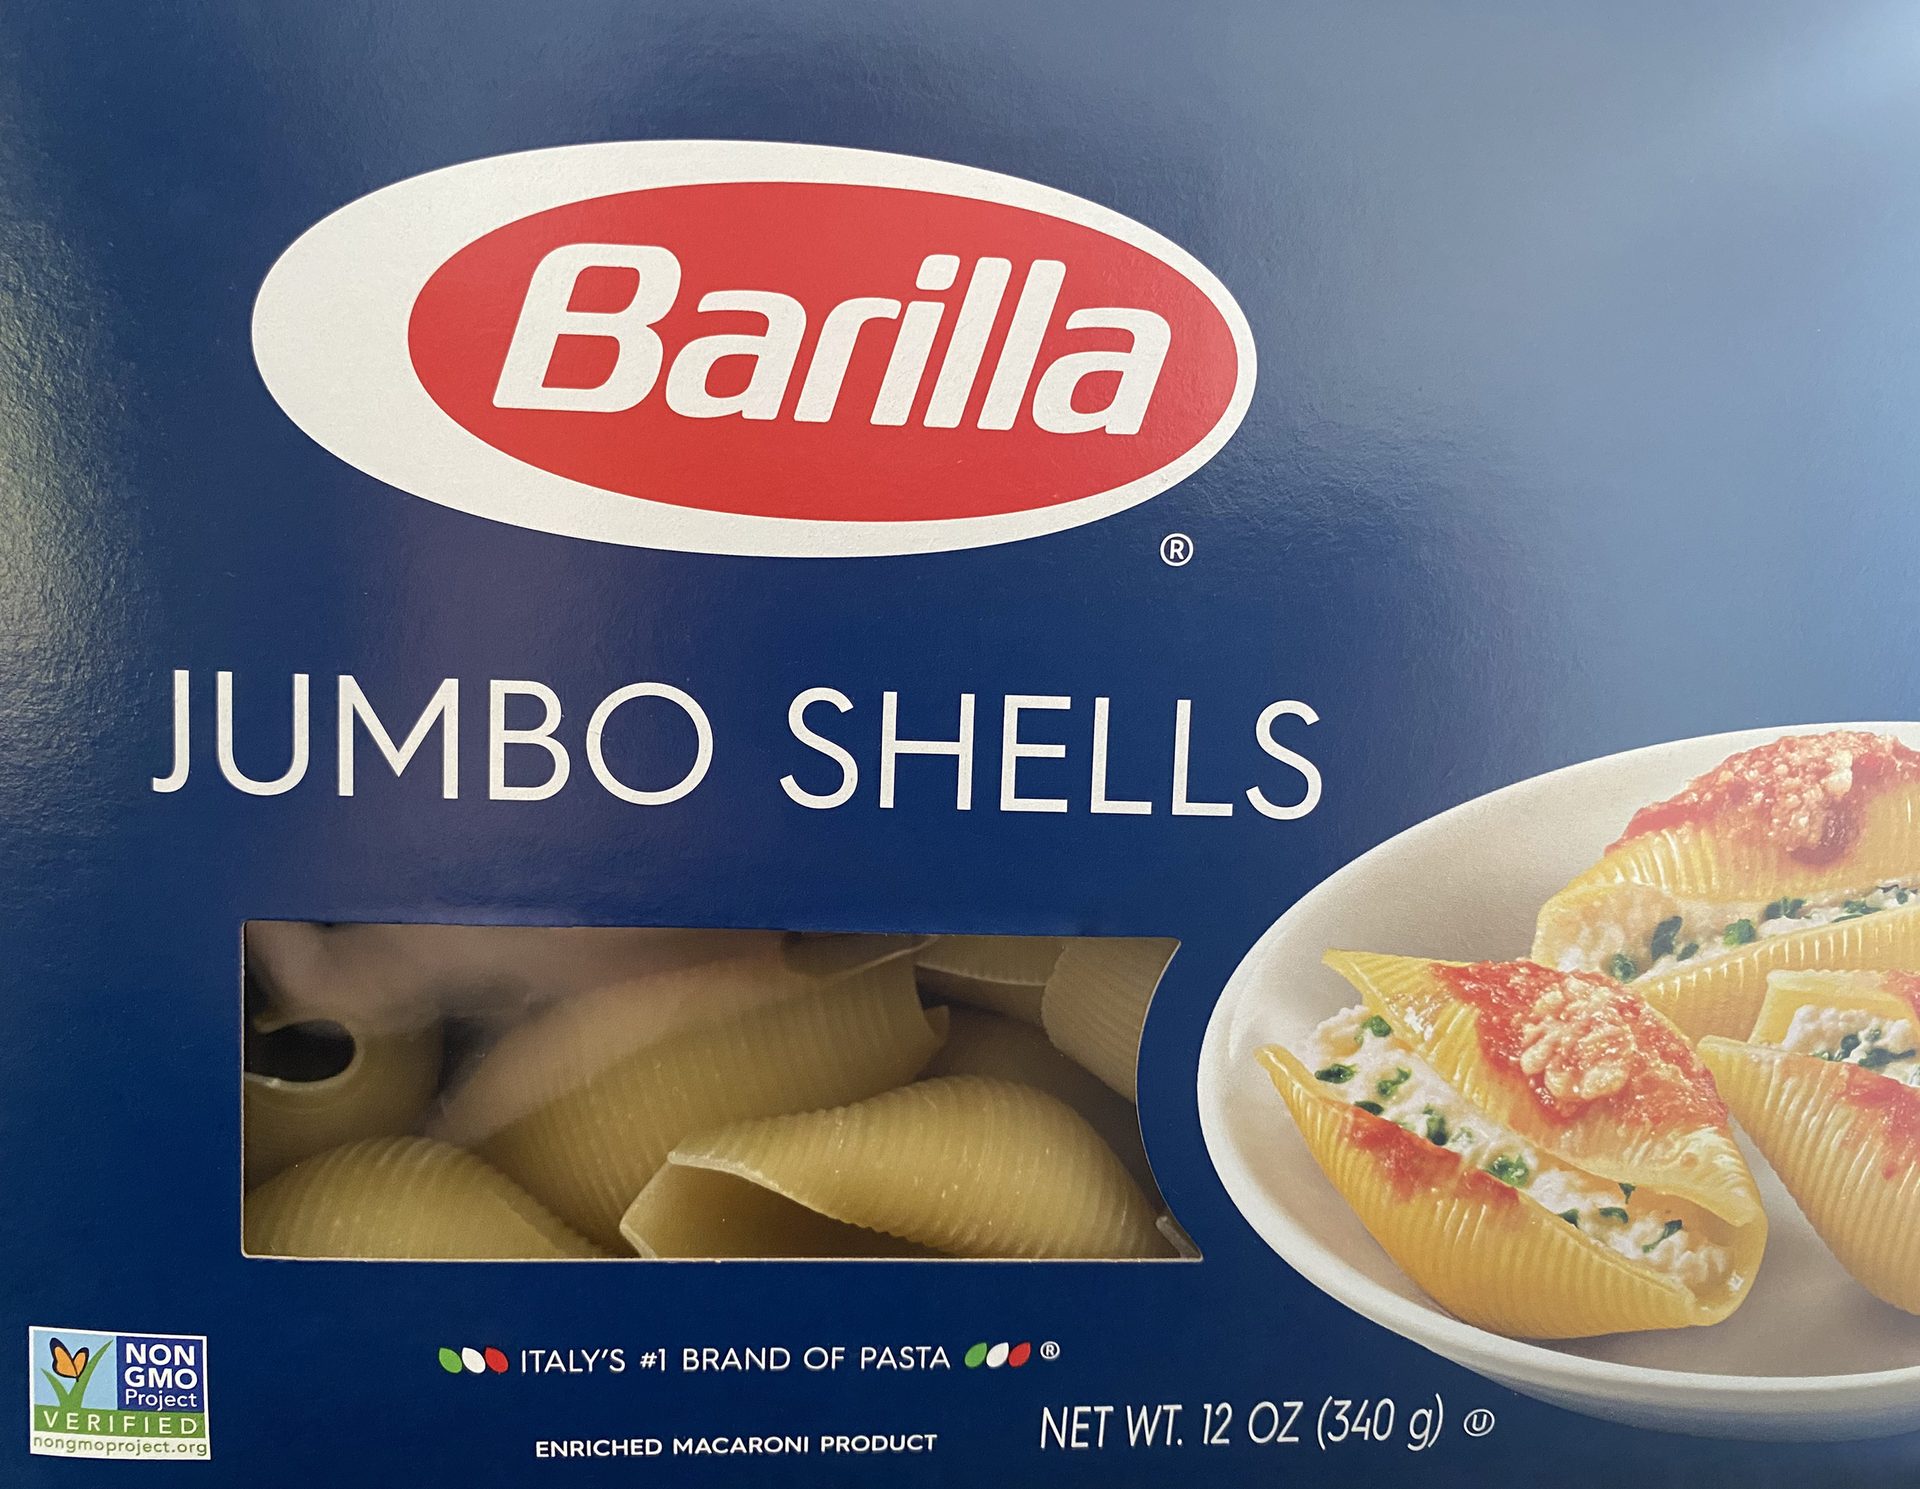 Barilla Jumbo Shells packaging